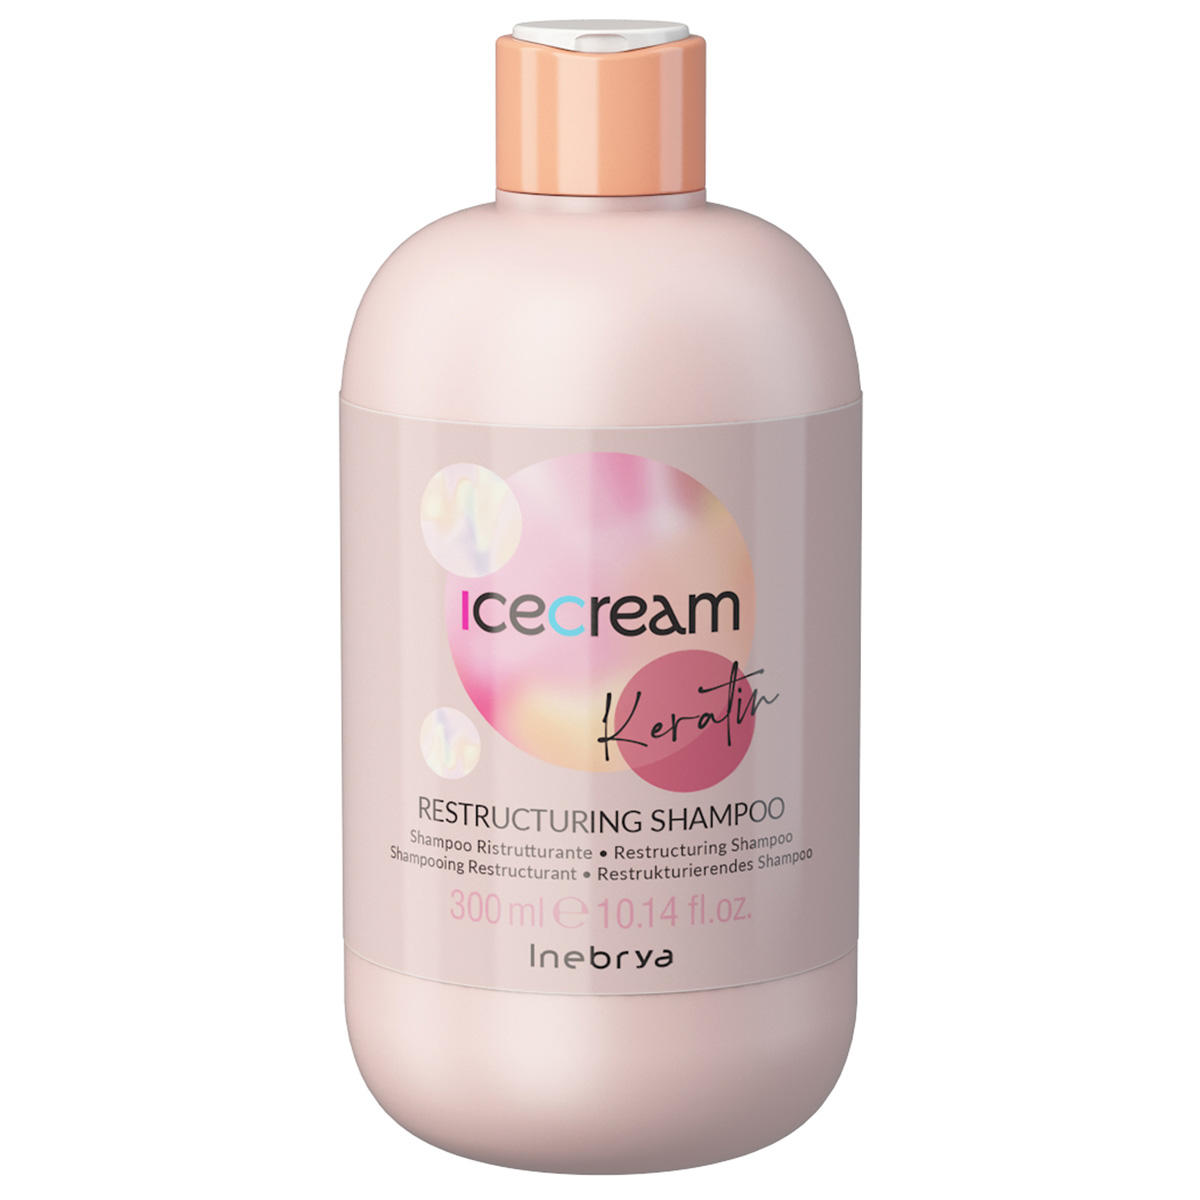 Inebrya Ice Cream Keratin Restructuring Shampoo  - 1